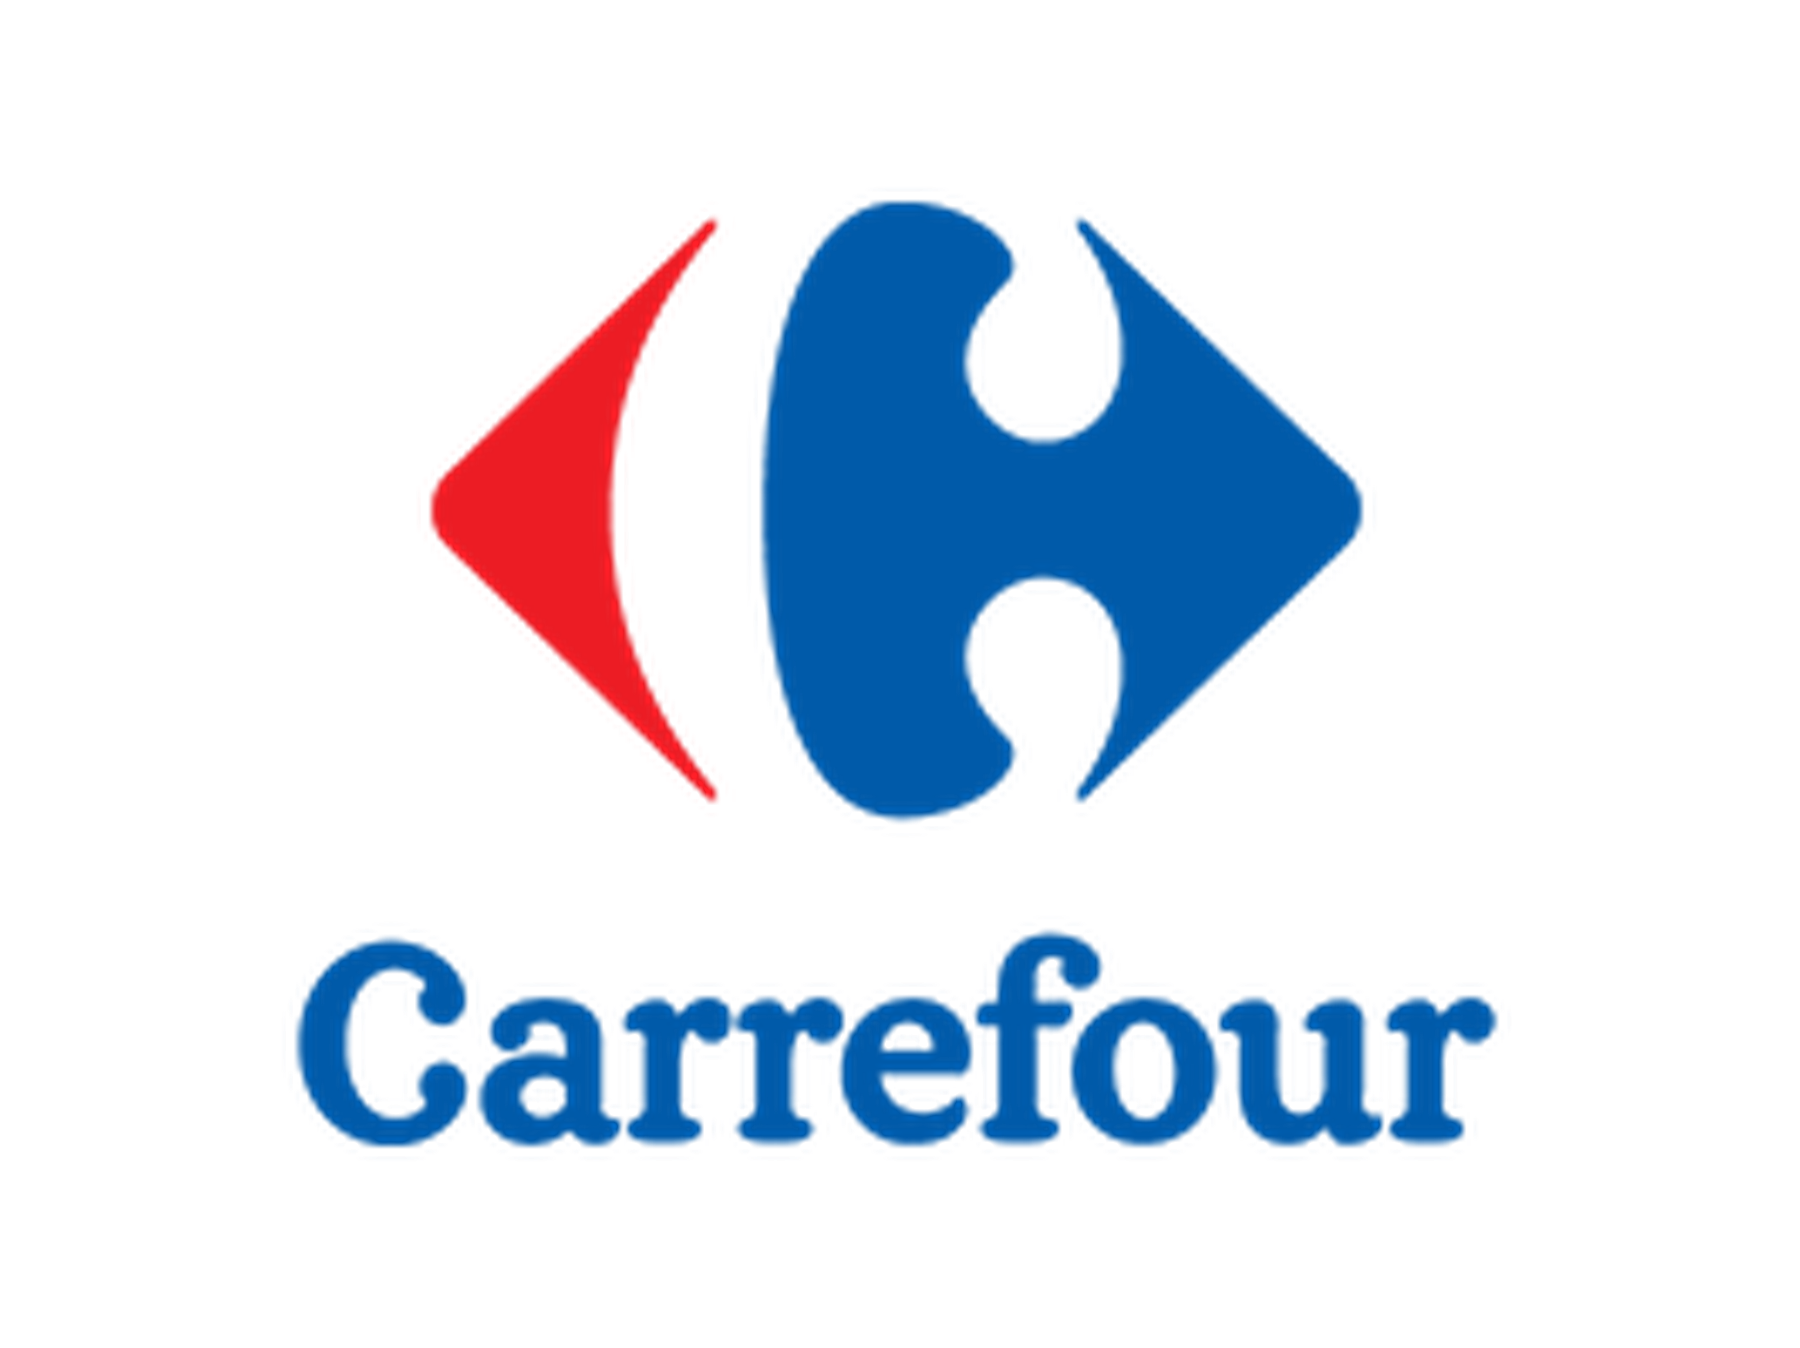 Code promo Carrefour